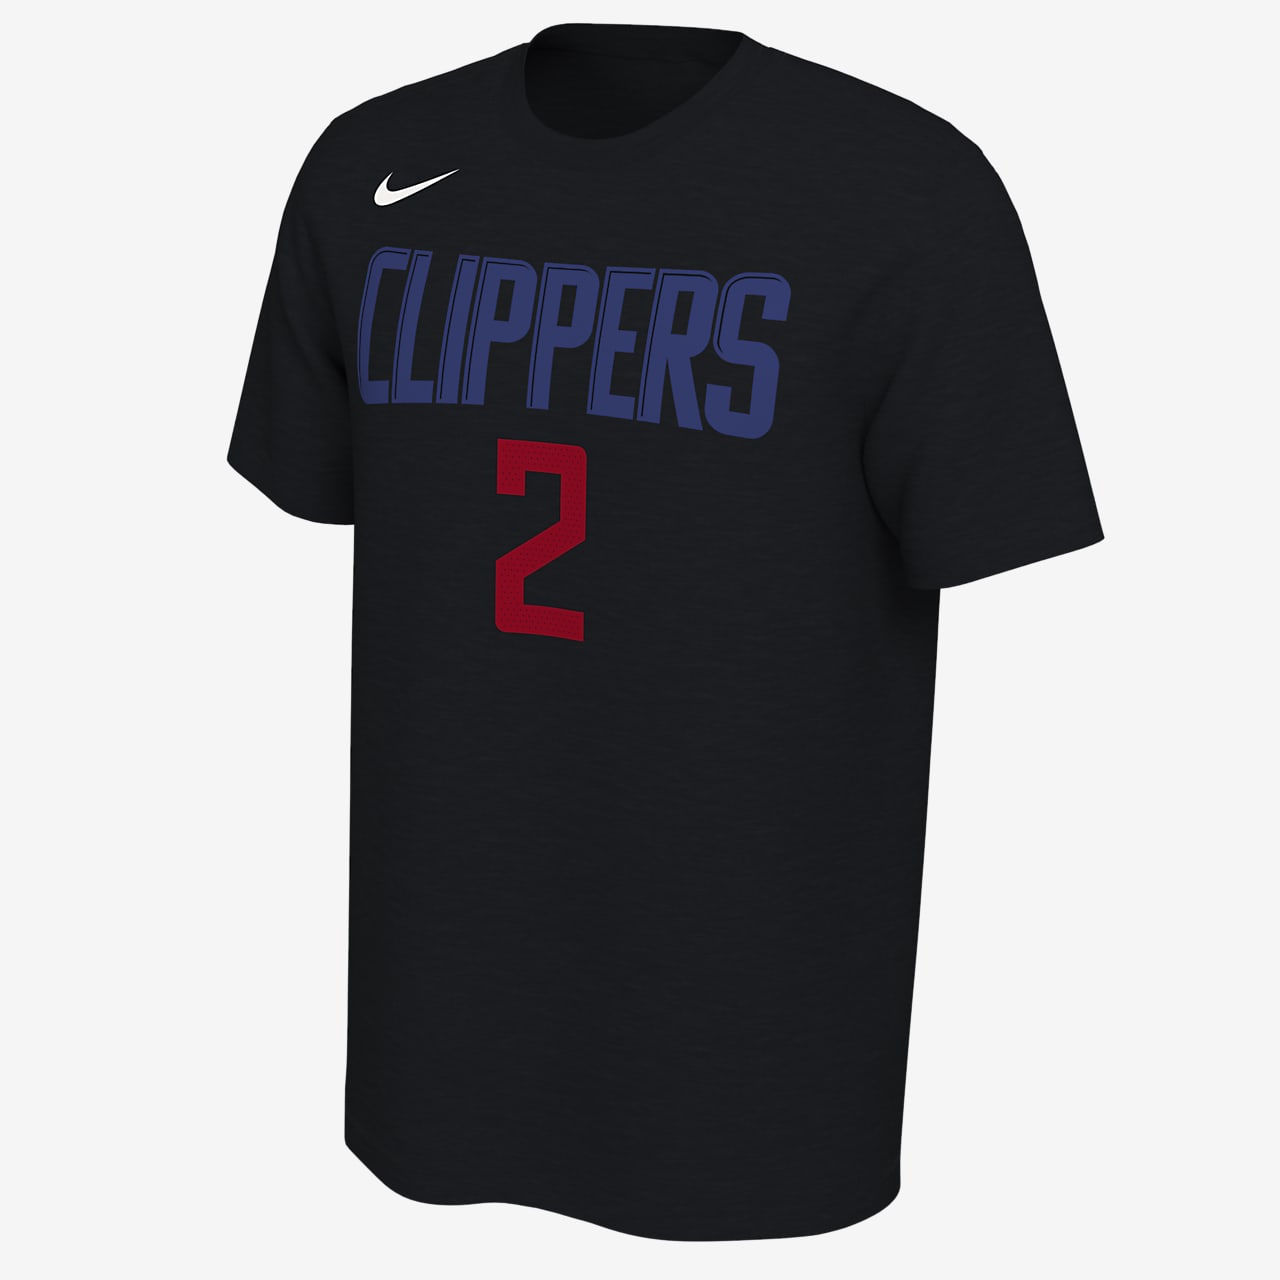 Playera para hombre Nike NBA Kawhi Leonard Clippers Icon Edition